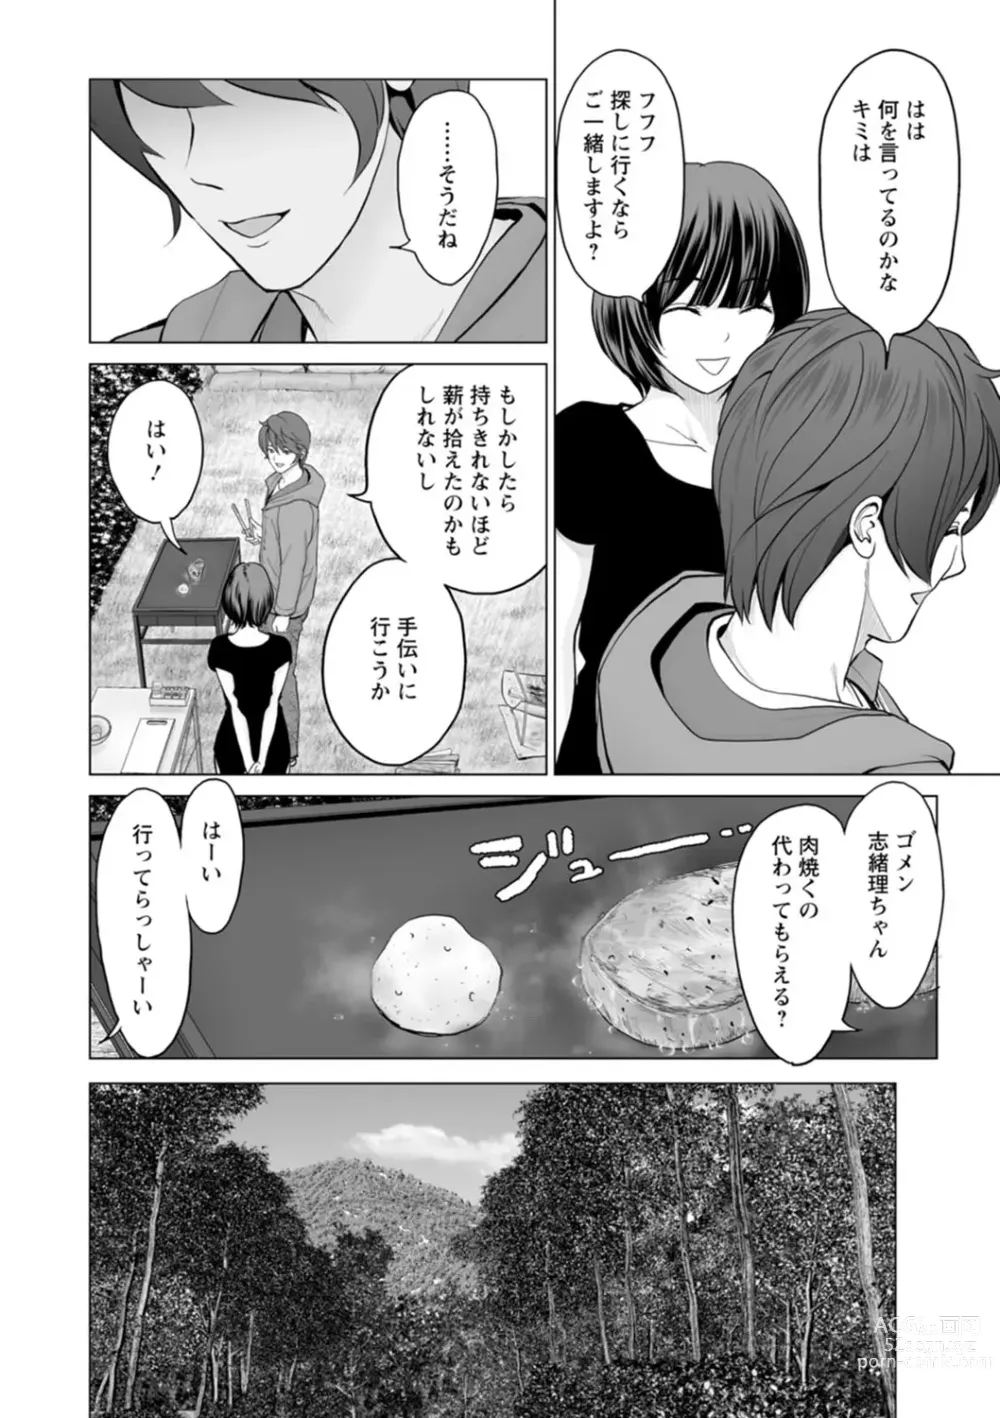 Page 10 of manga Fujun Group Kouyuu - Impure Group Dating